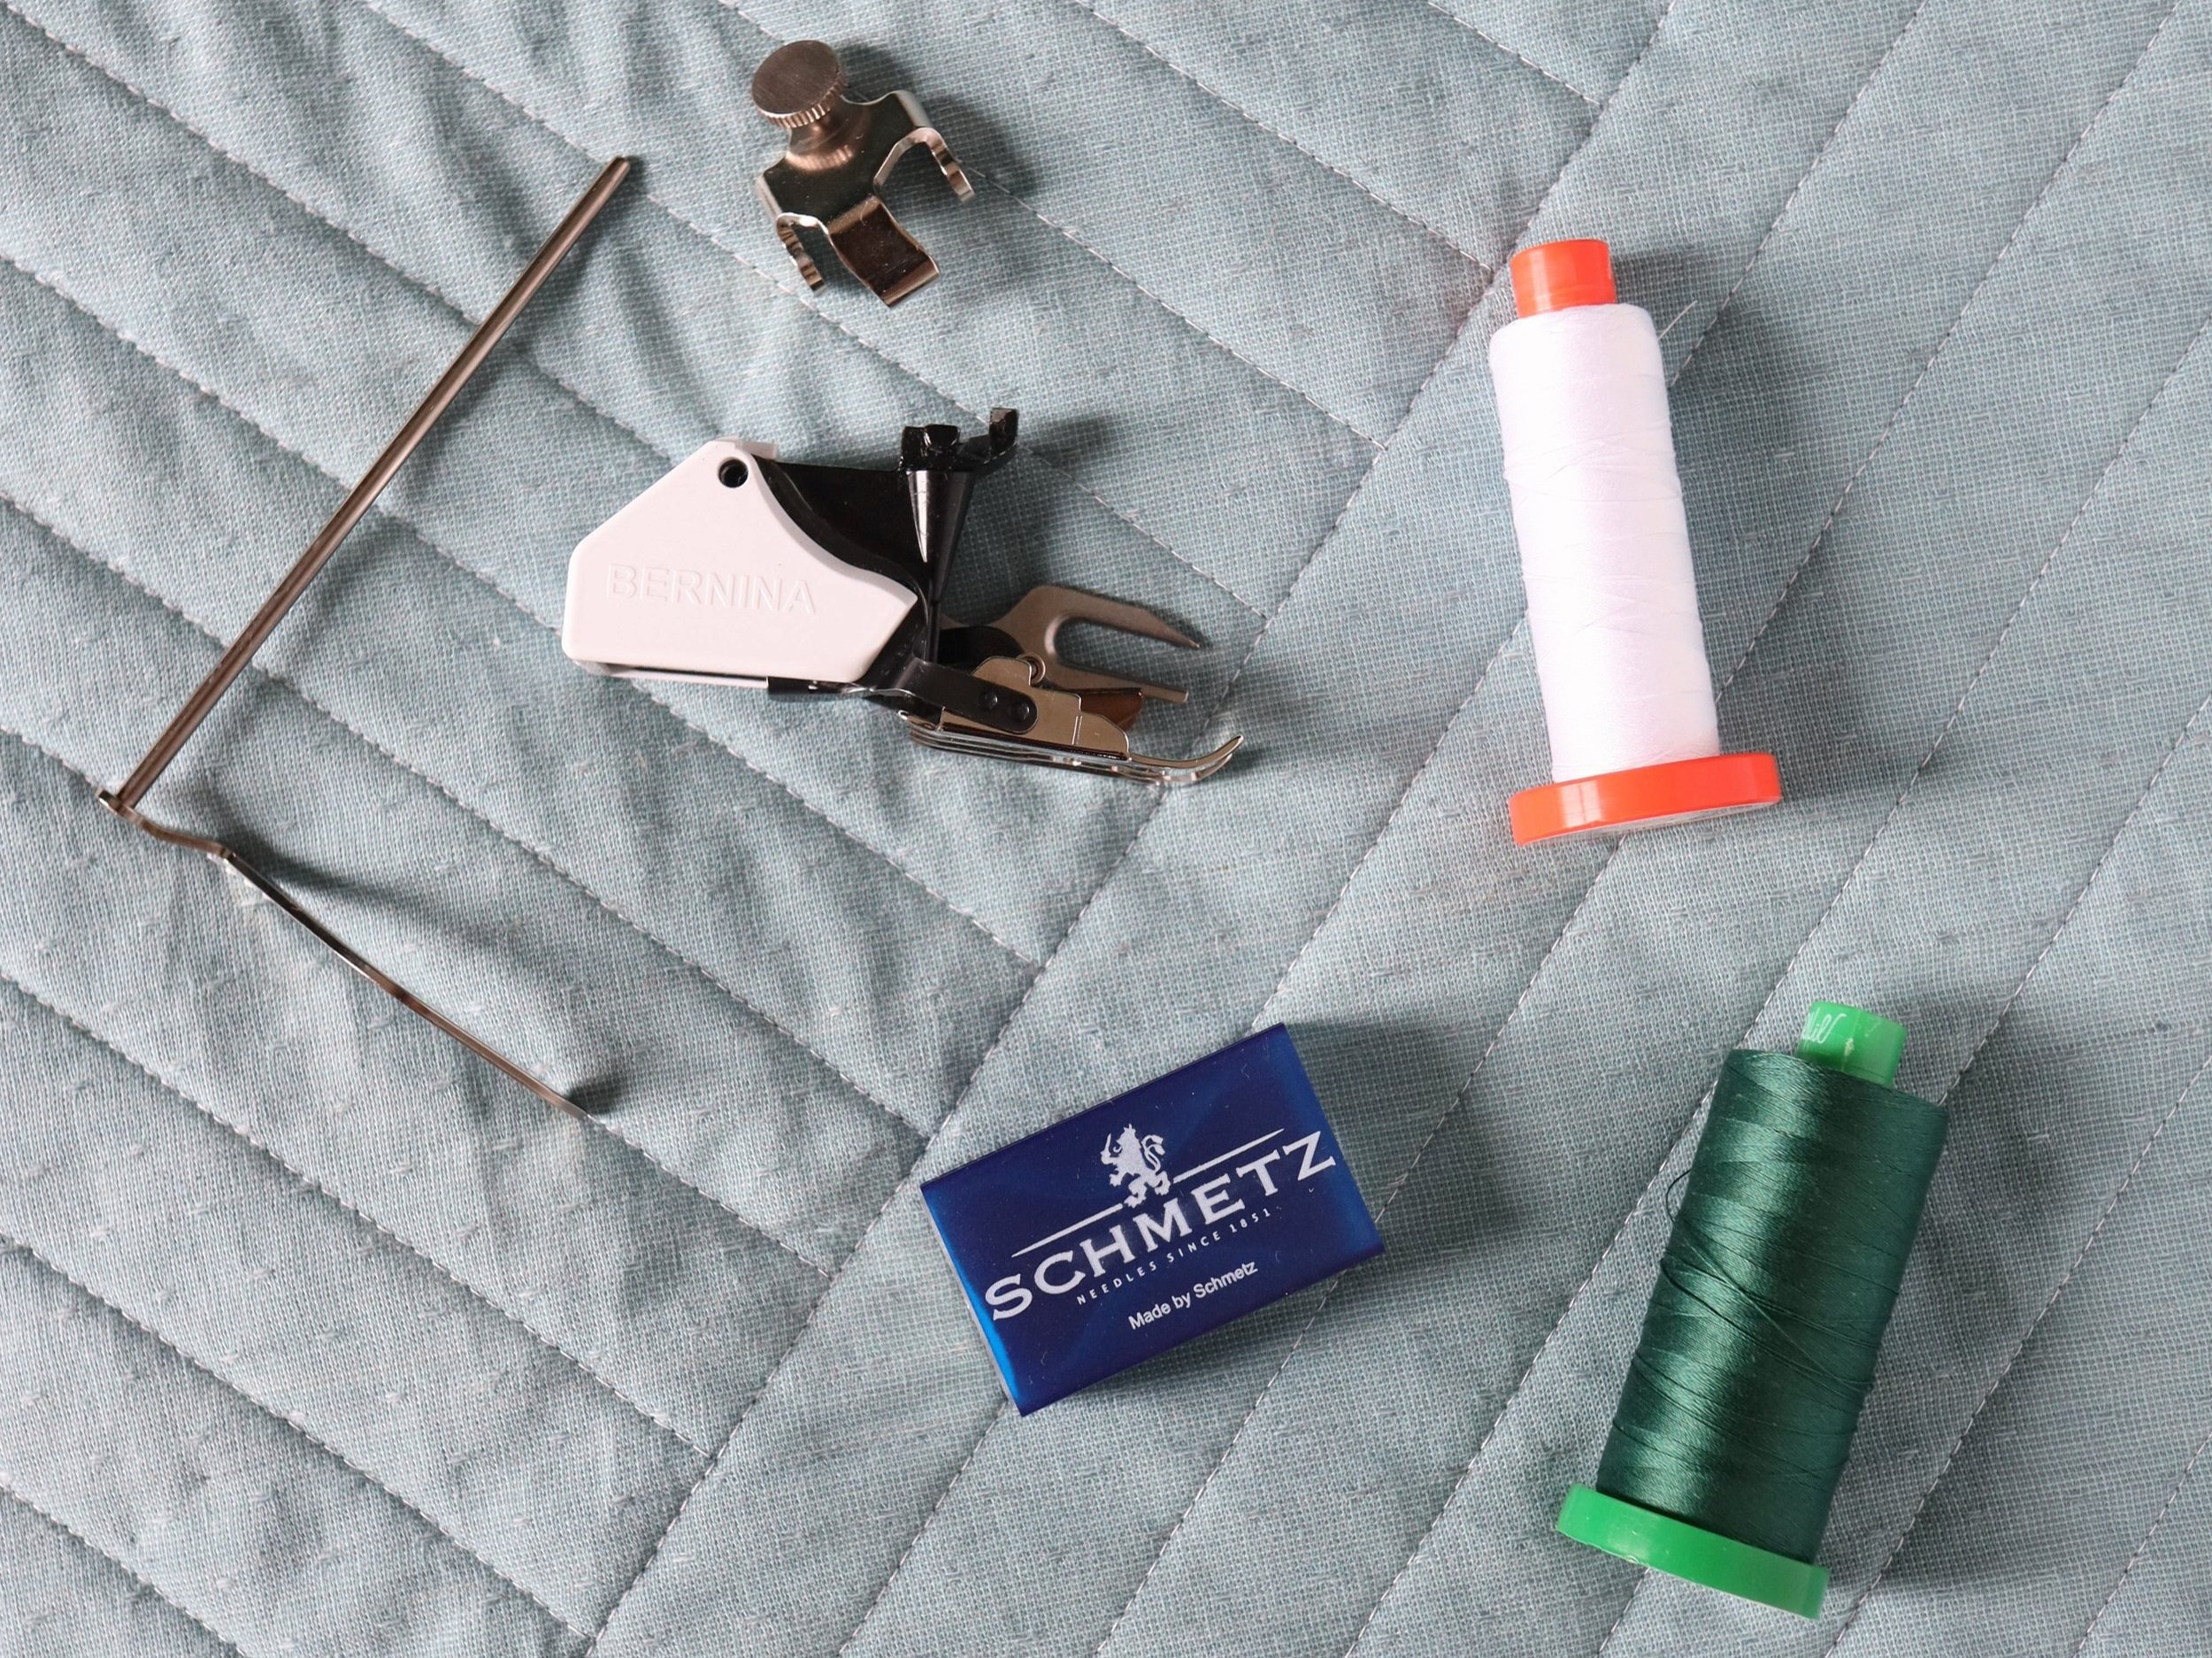 Sewing Tools Part 1: Measuring » BERNINA Blog